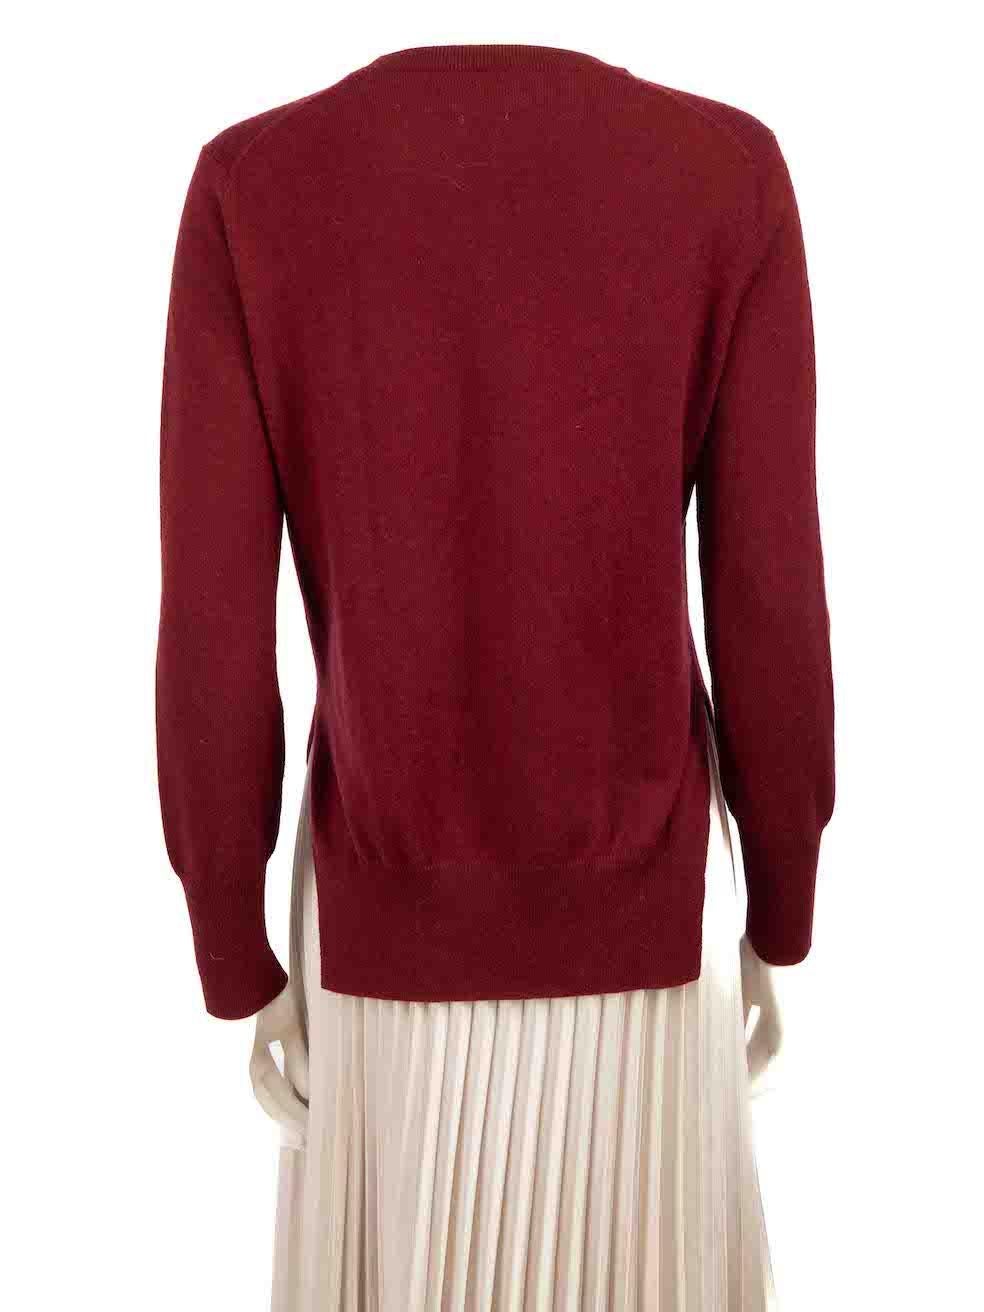 Isabel Marant Isabel Marant Etoile Burgundy Knitted Split-Hem Jumper Size S In Good Condition For Sale In London, GB